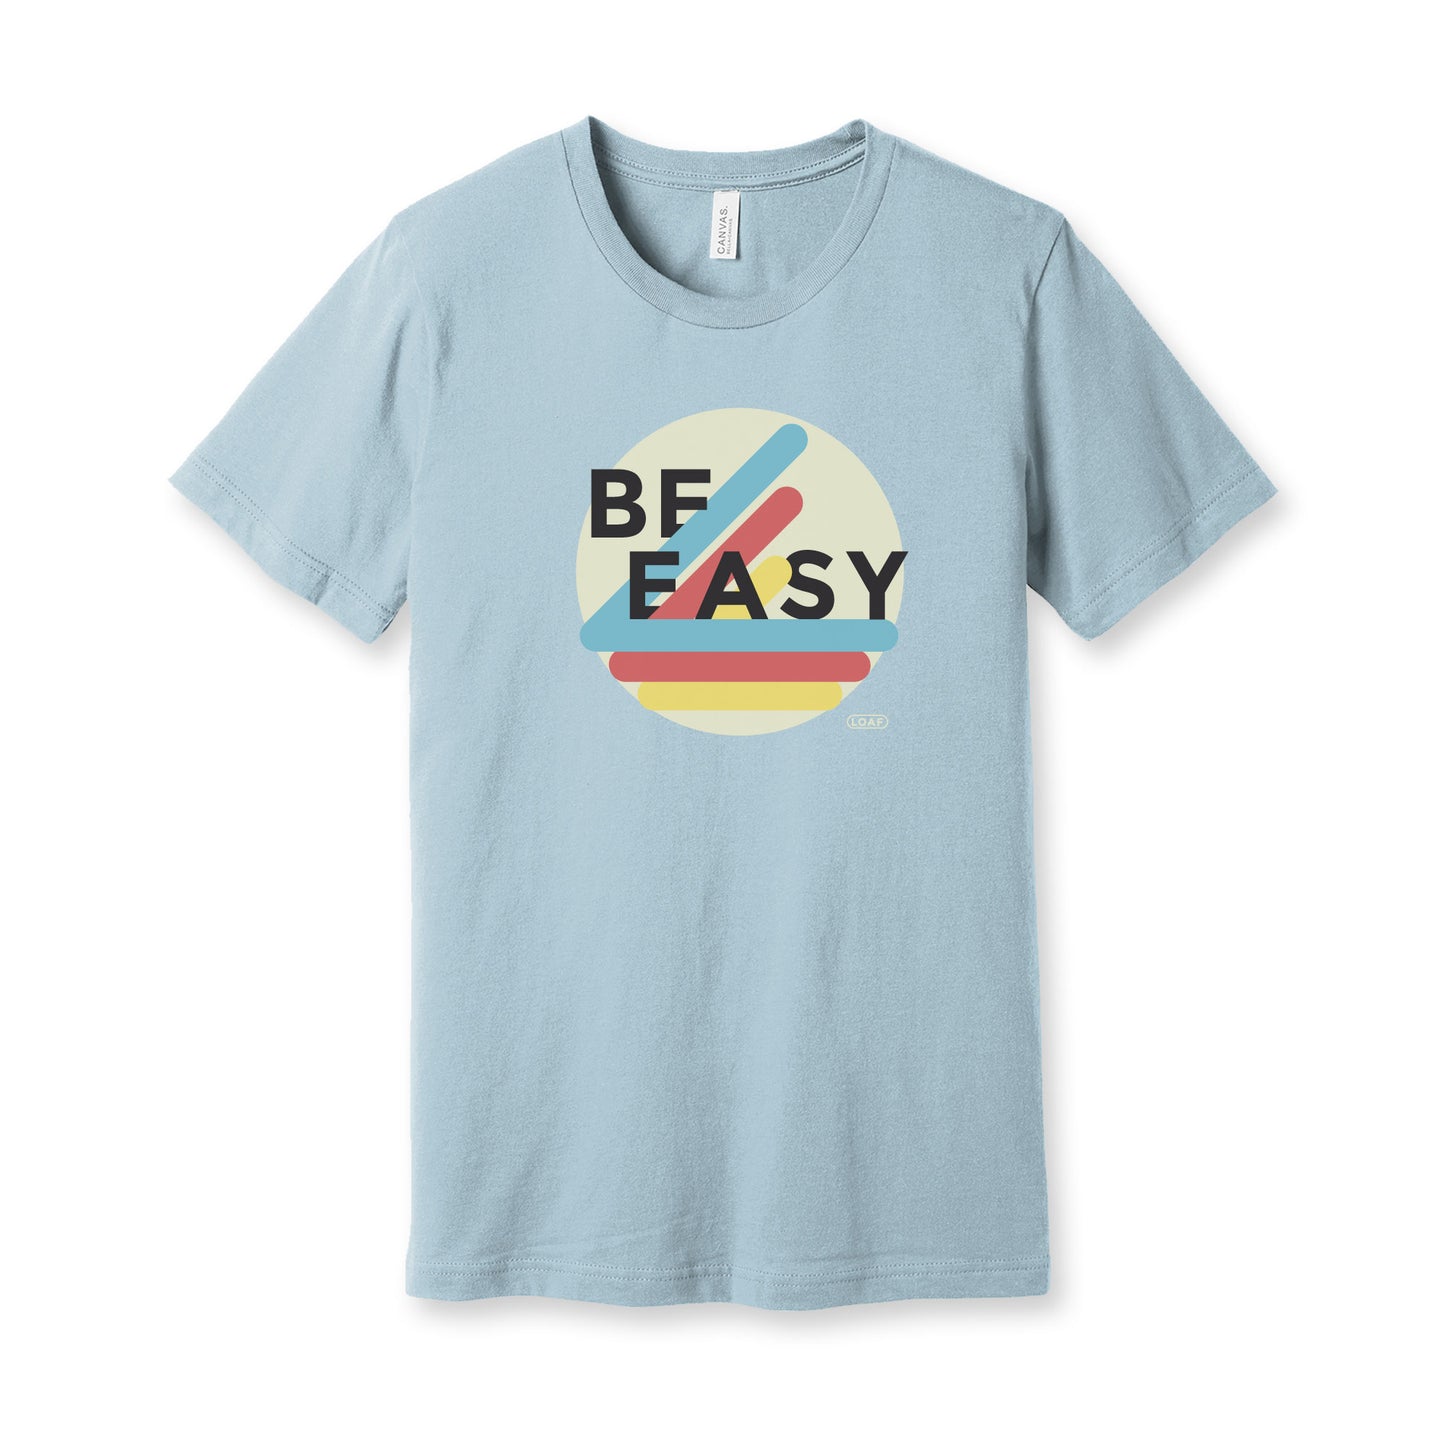 Vintage Be Easy T shirt for men or women Bella Canvas Super soft Light Blue shirt